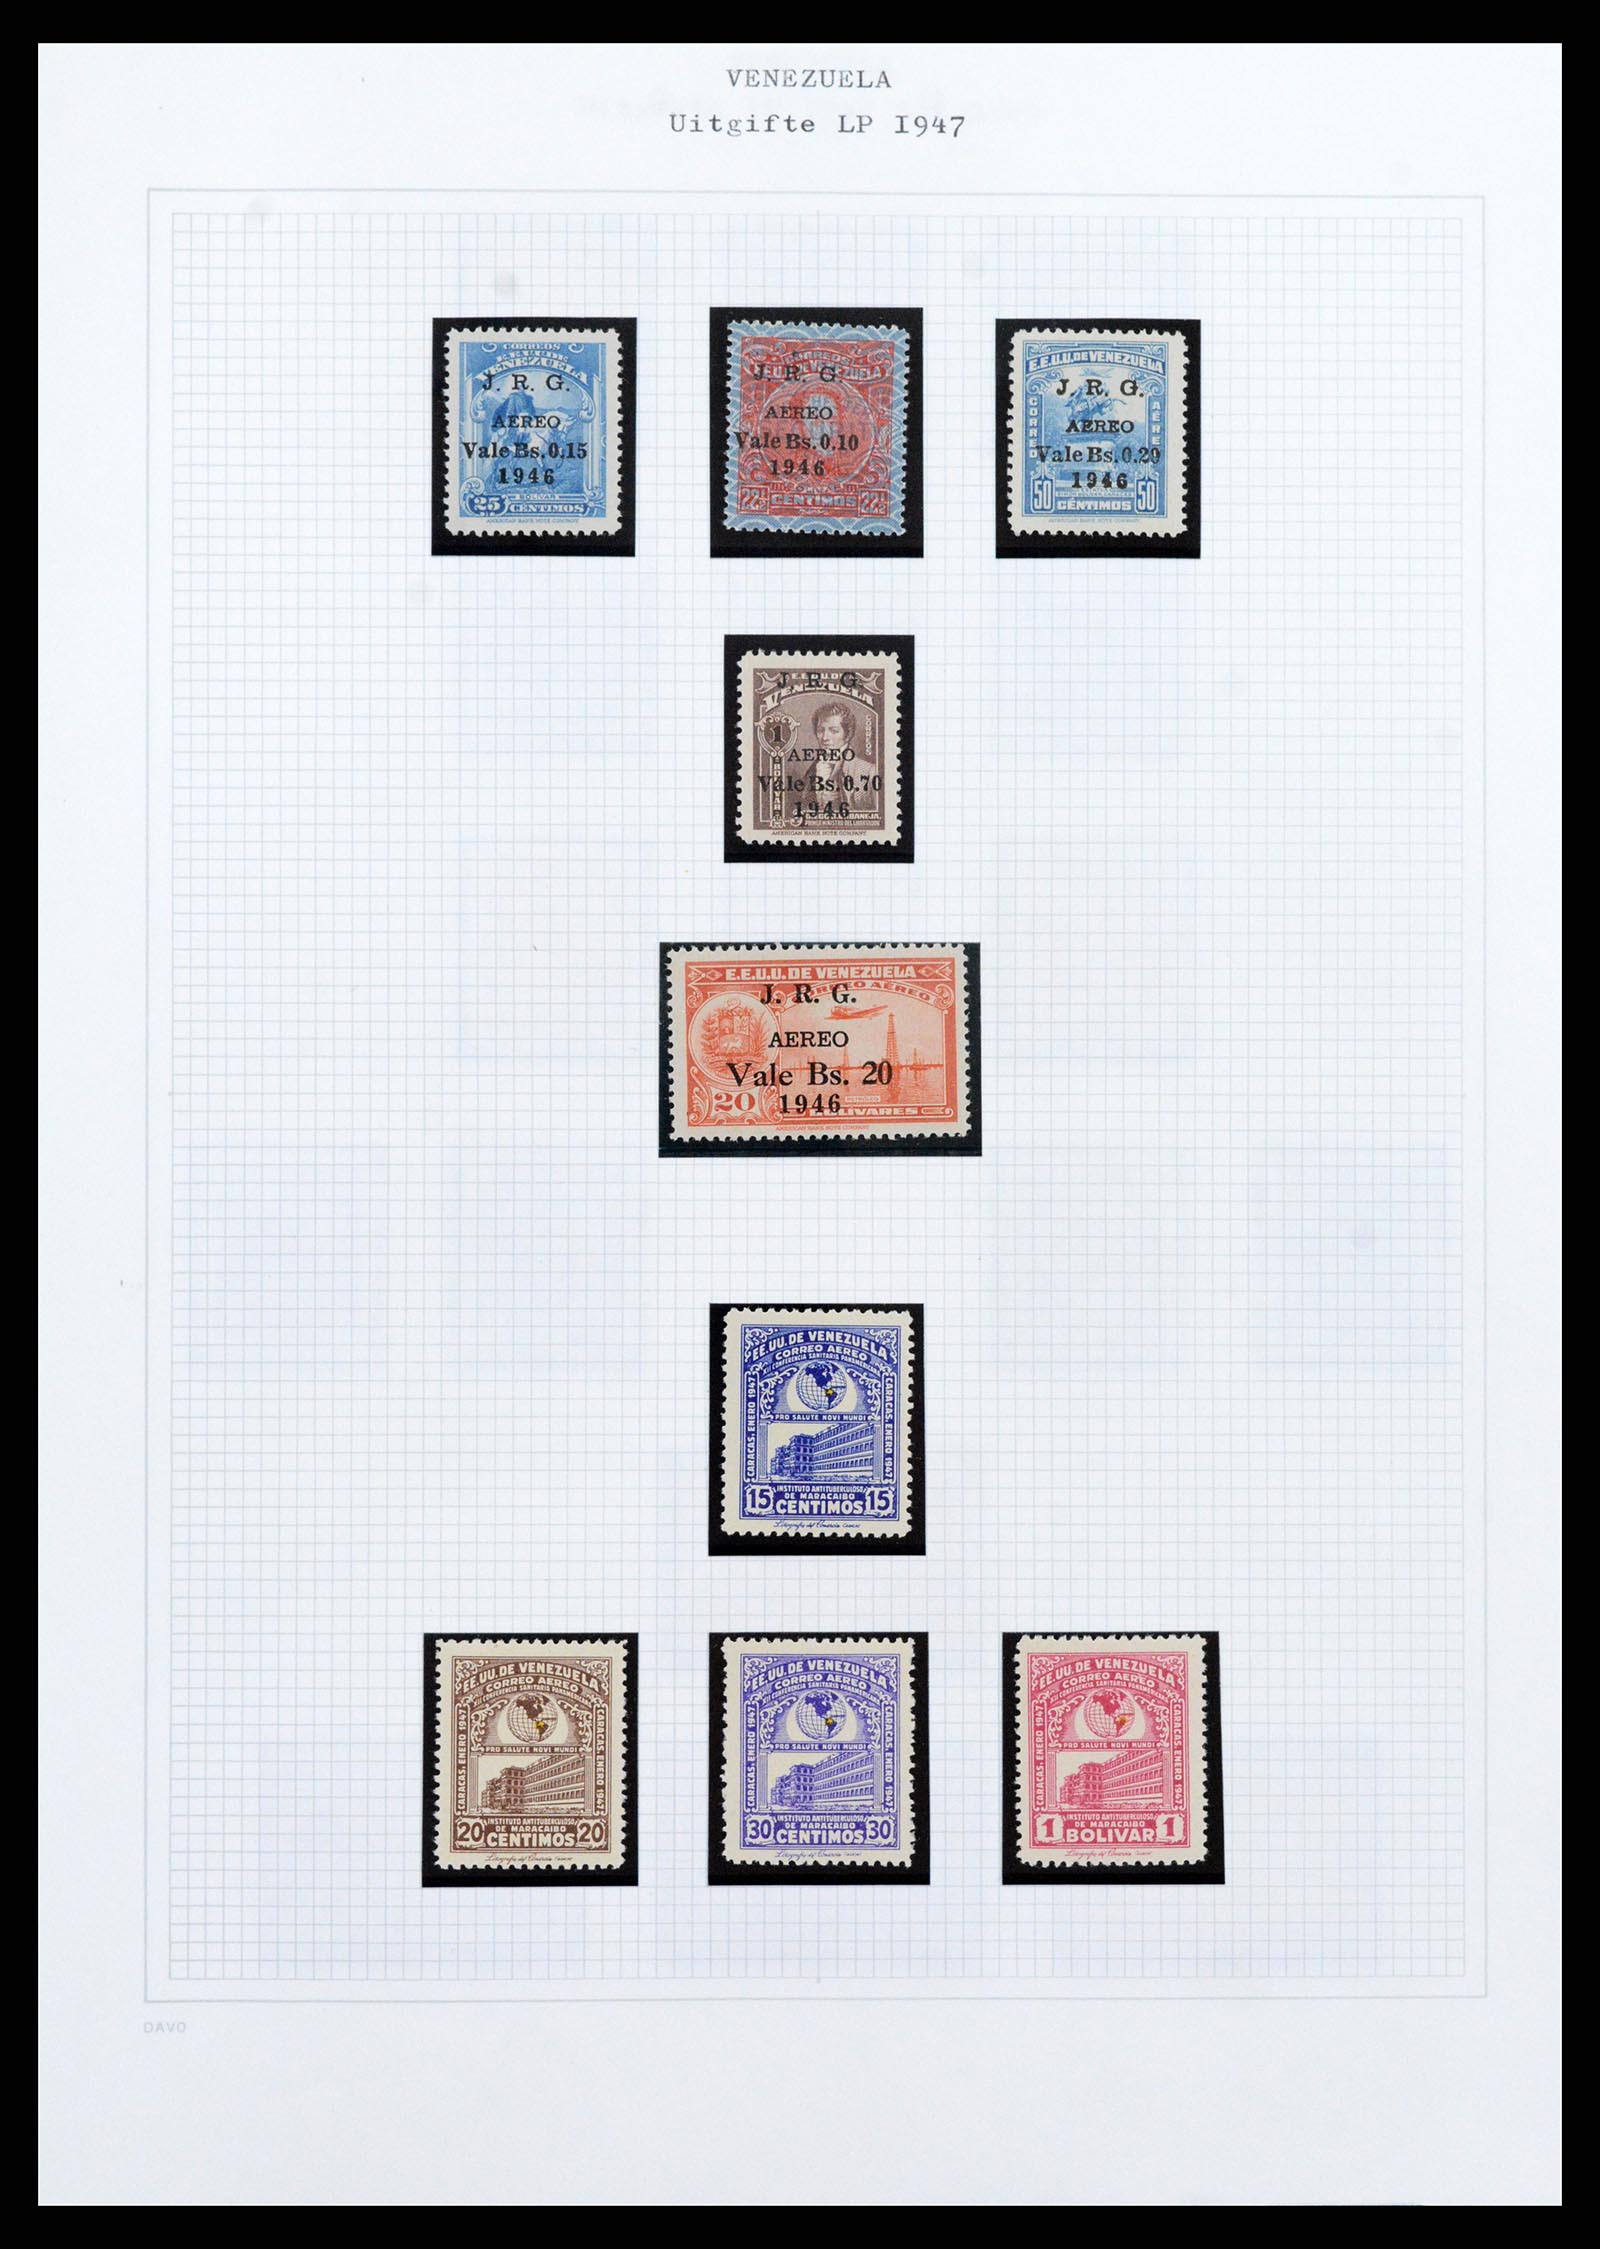 37353 068 - Stamp collection 37353 Venezuela 1880-1960.